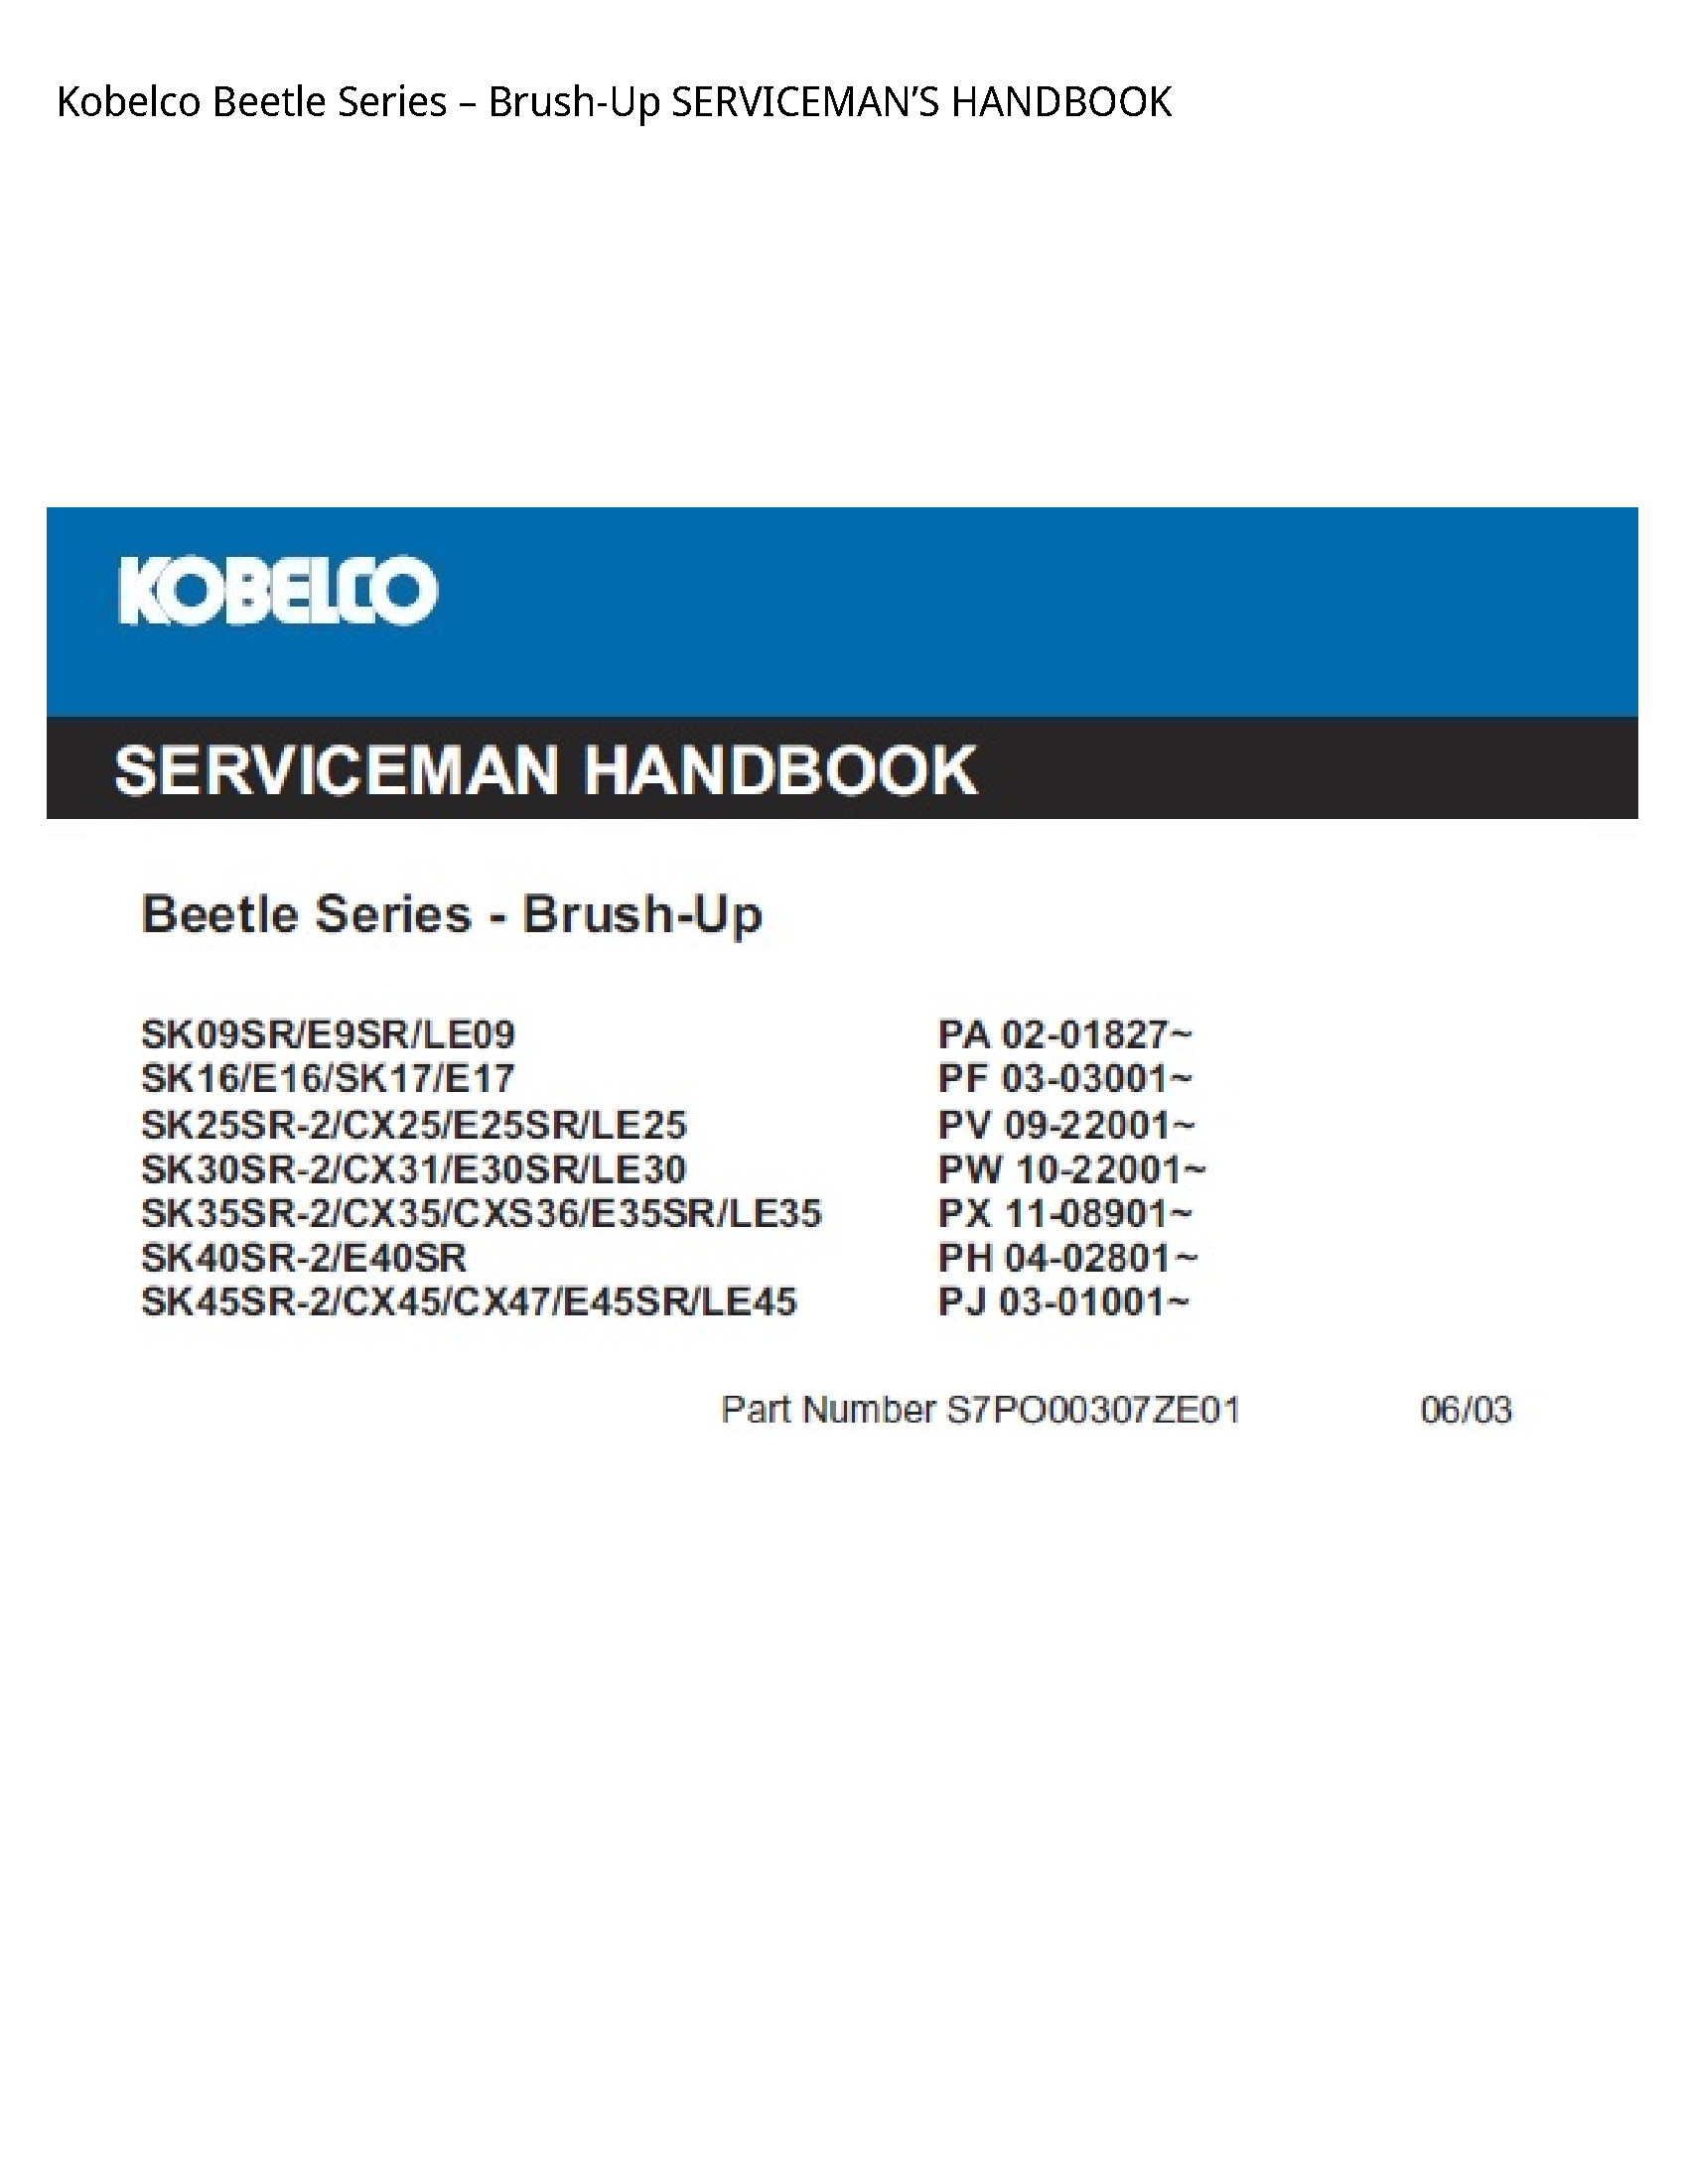 Kobelco Beetle Series Brush-Up SERVICEMAN’S HANDBOOK manual